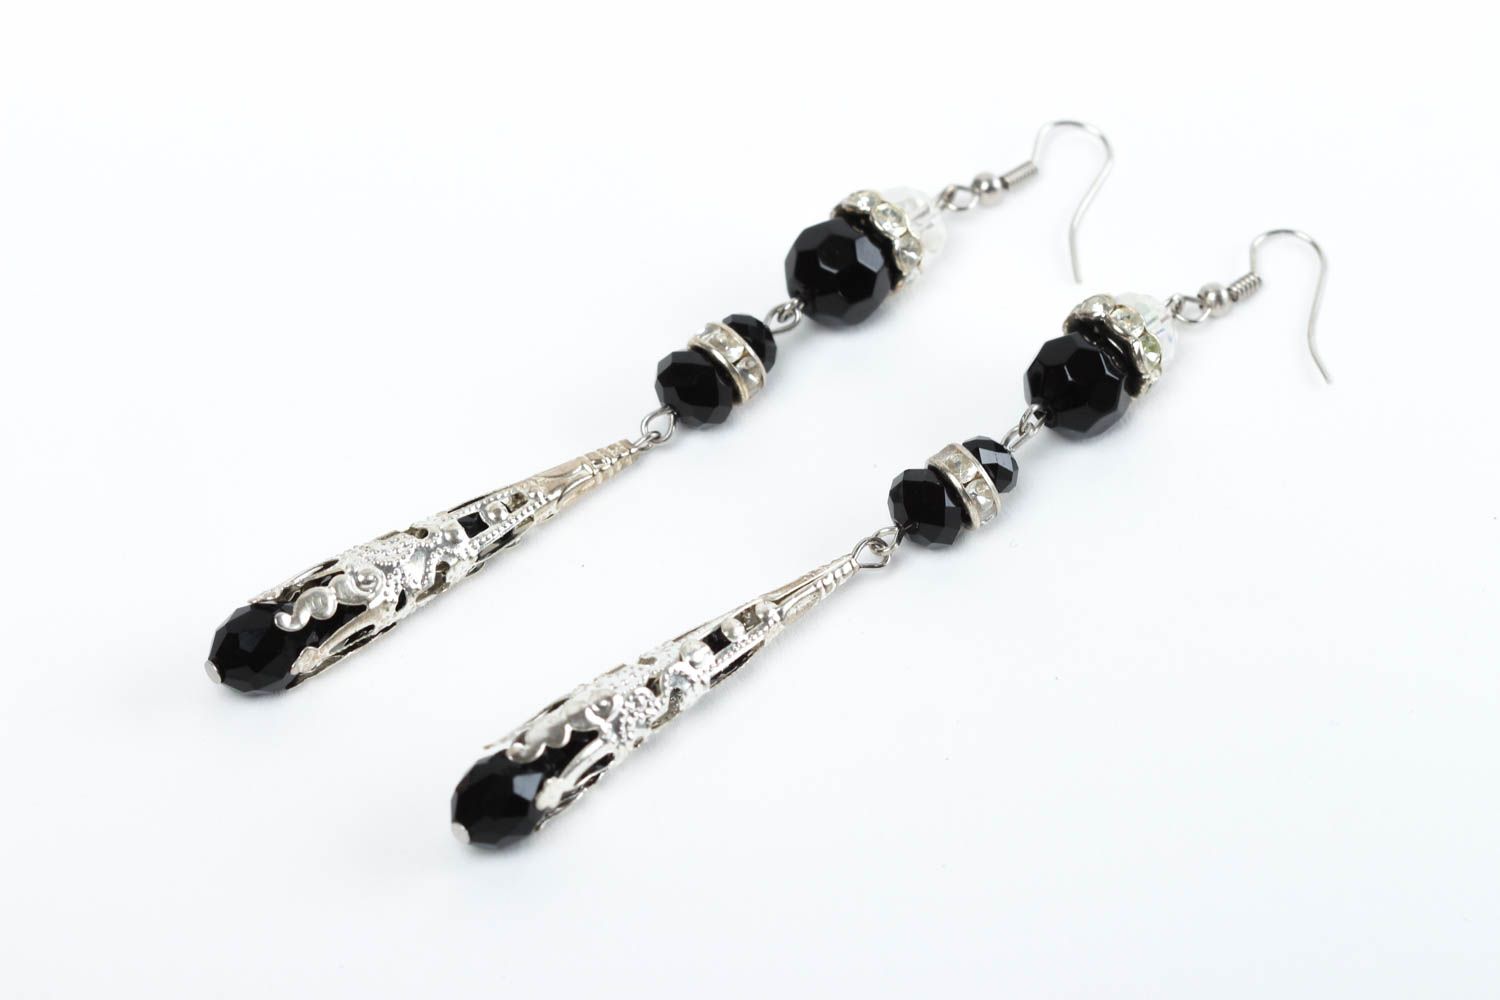 Handmade jewelry designer accessory unusual earrings for girls gift ideas photo 2